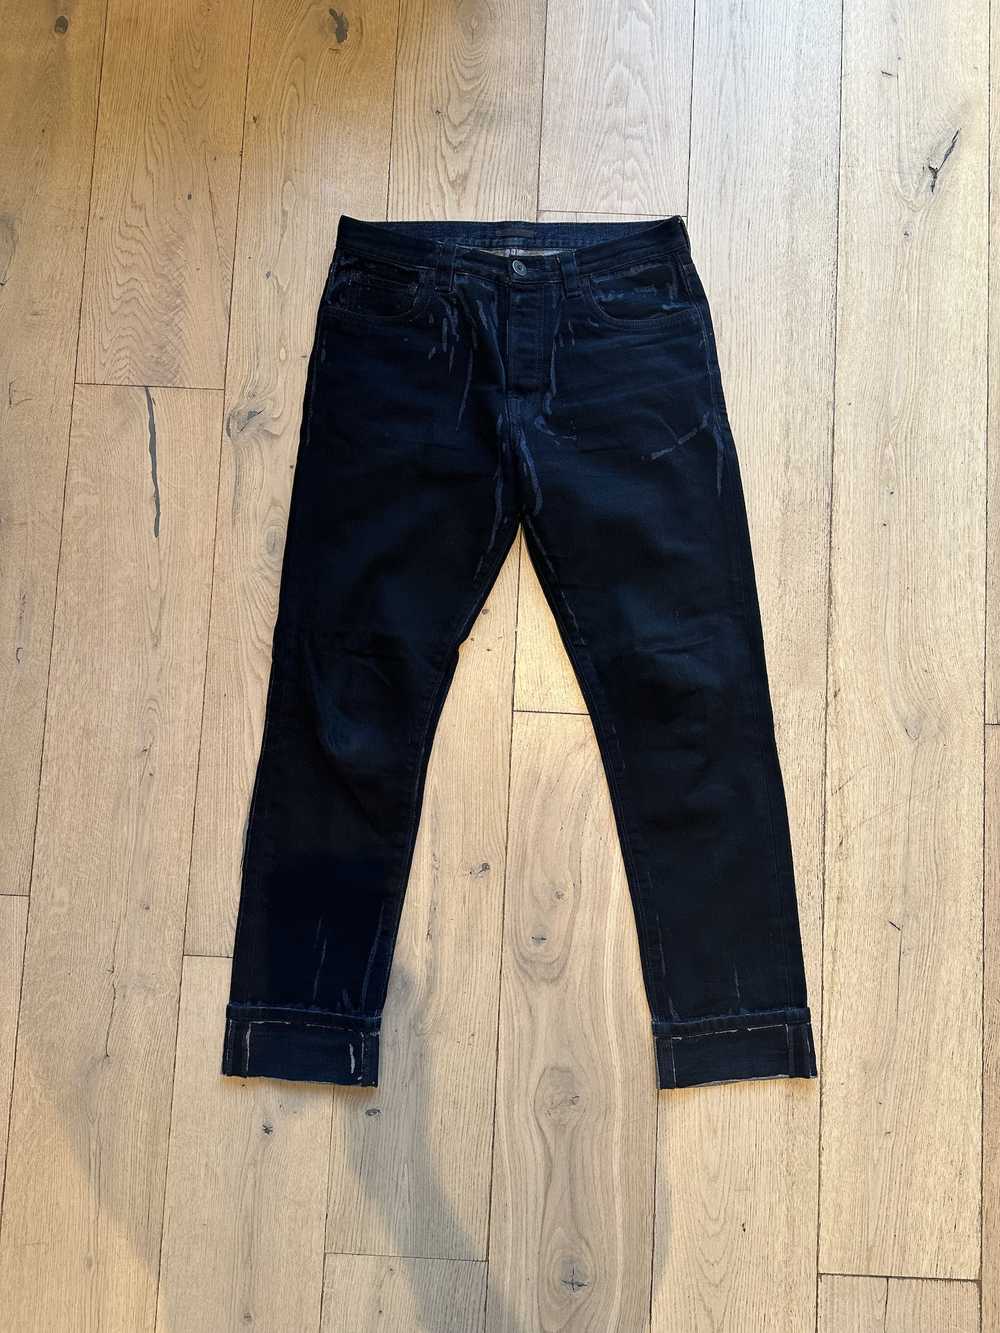 Prada Prada Over dyed slim fit jeans - image 1